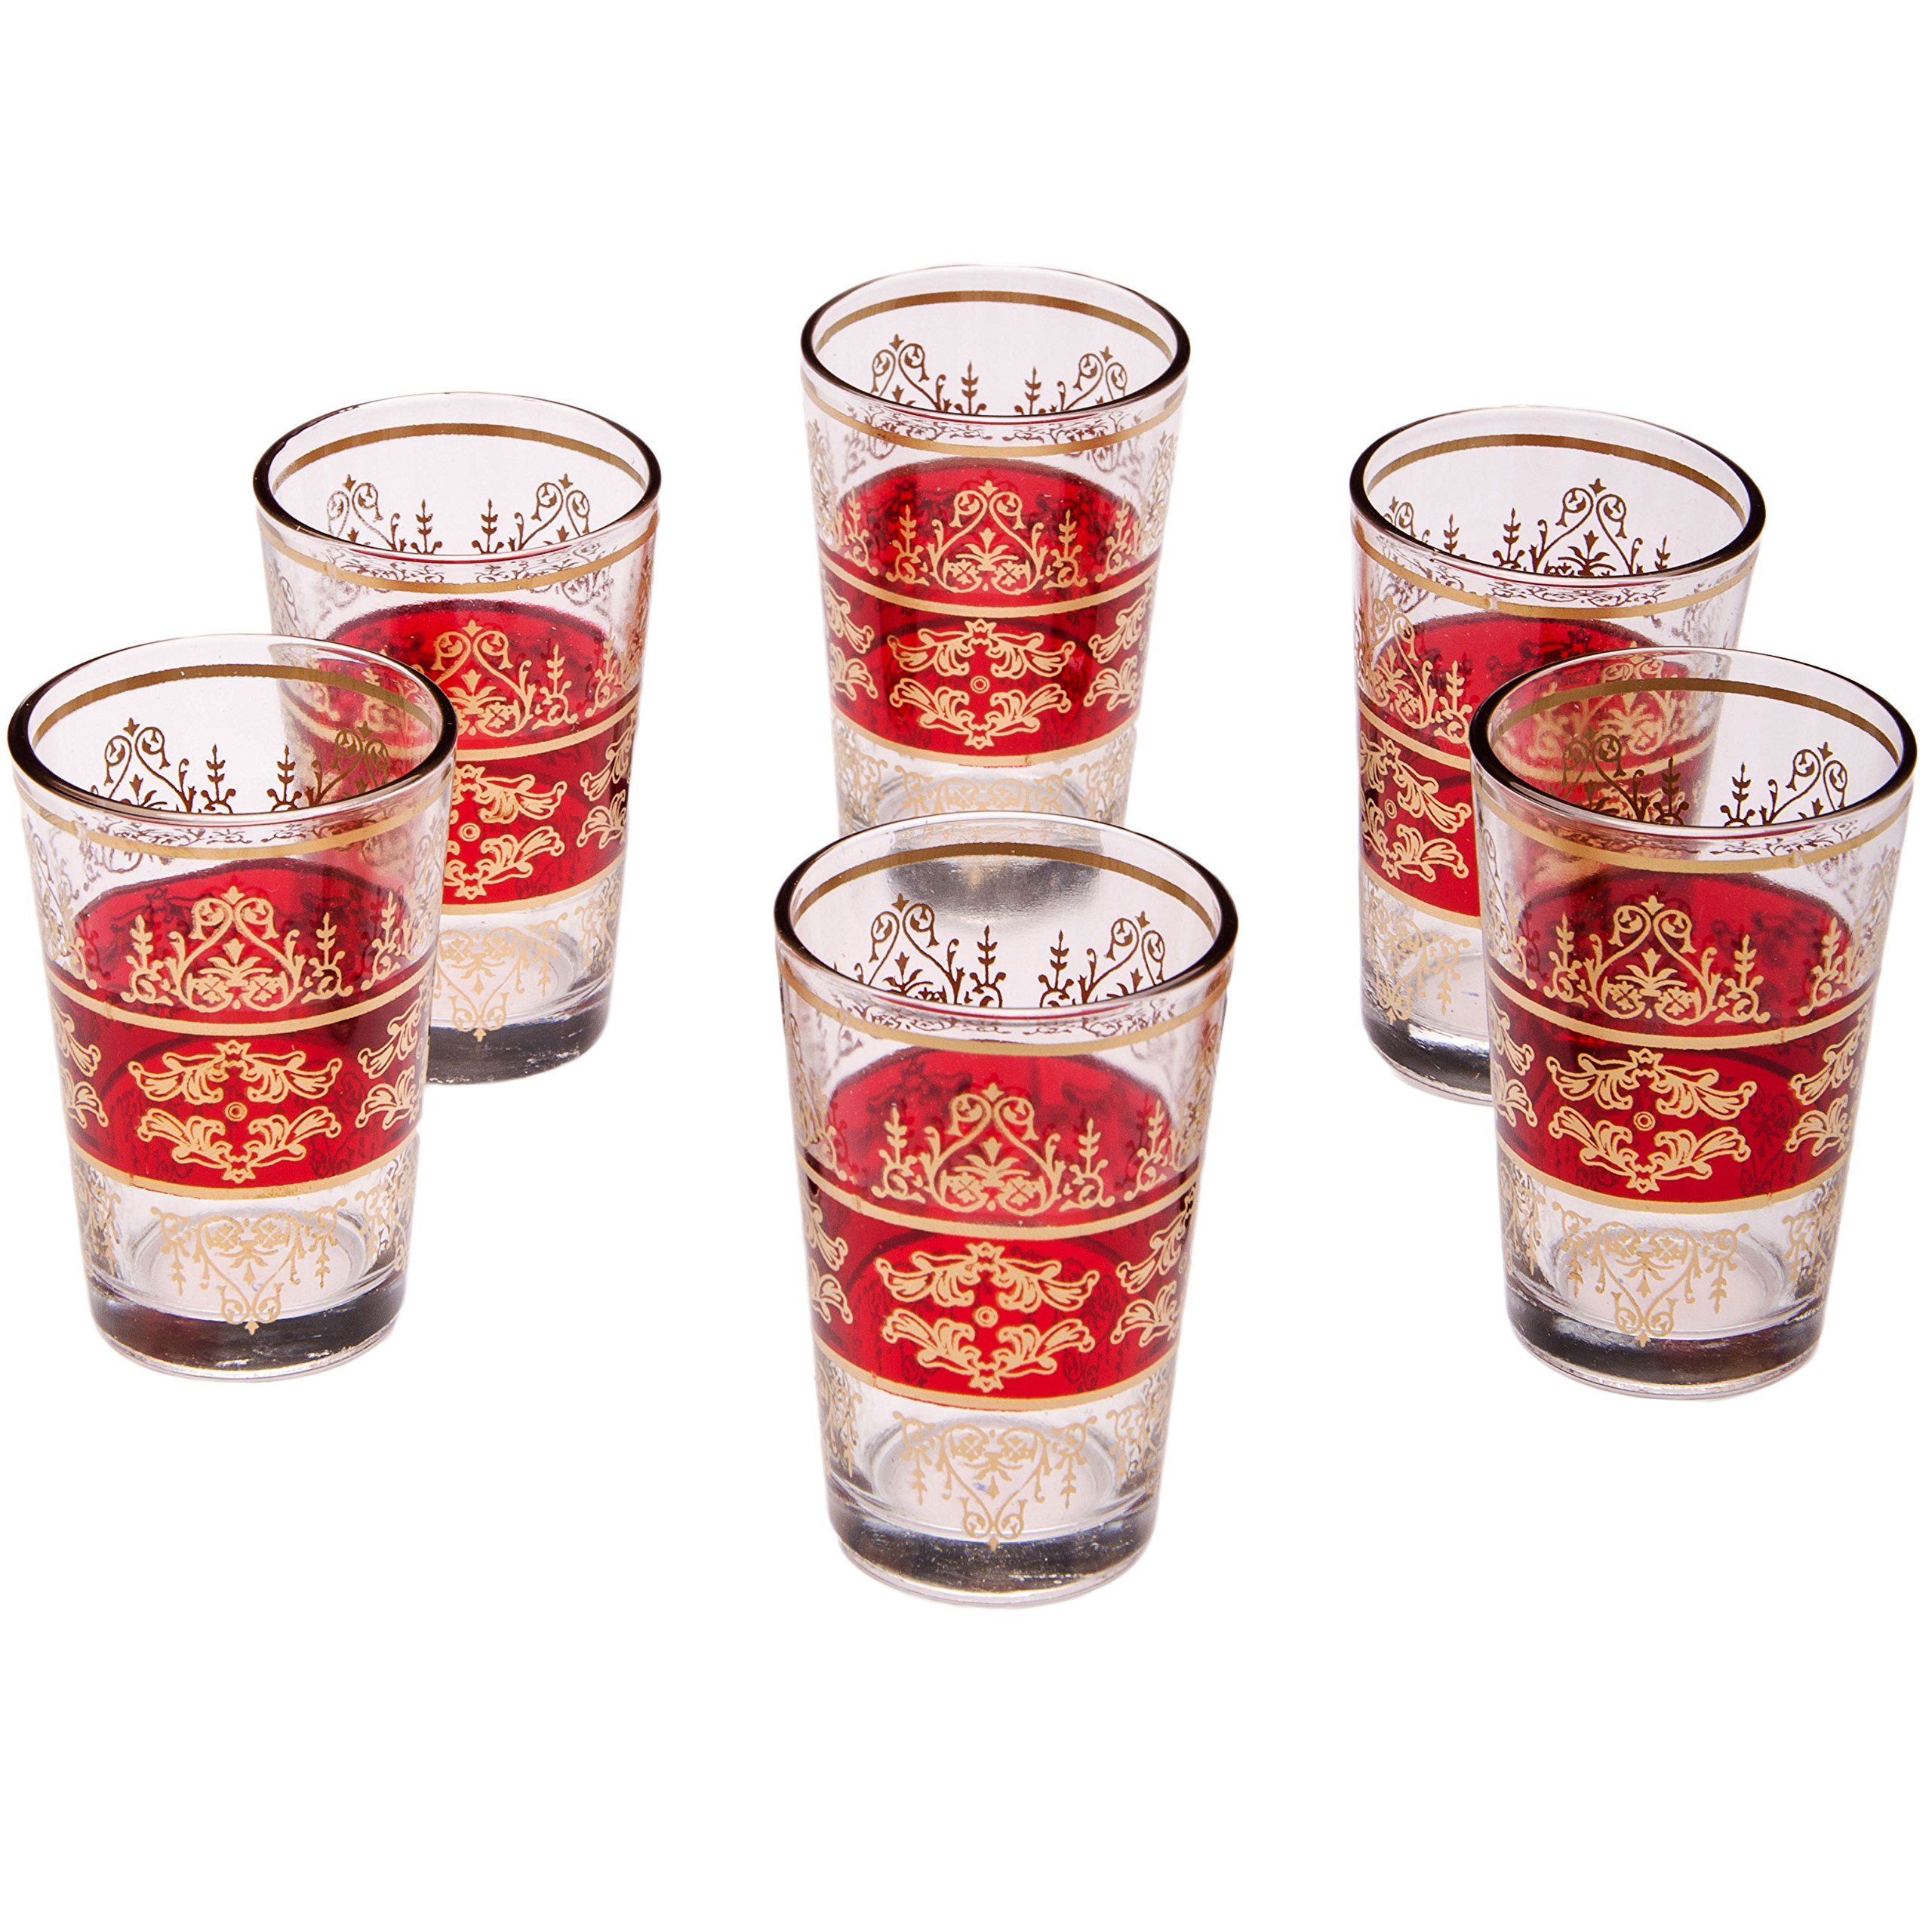 Orientalische verzierte Teegläser Set 6 Gläser Marrakesch Rot Gold | Marokkanische Tee Gläser Set 6 teilig Deko orientalisch | 6 x Orientalisches Marokkanisches Teeglas verziert | Farben auswählen